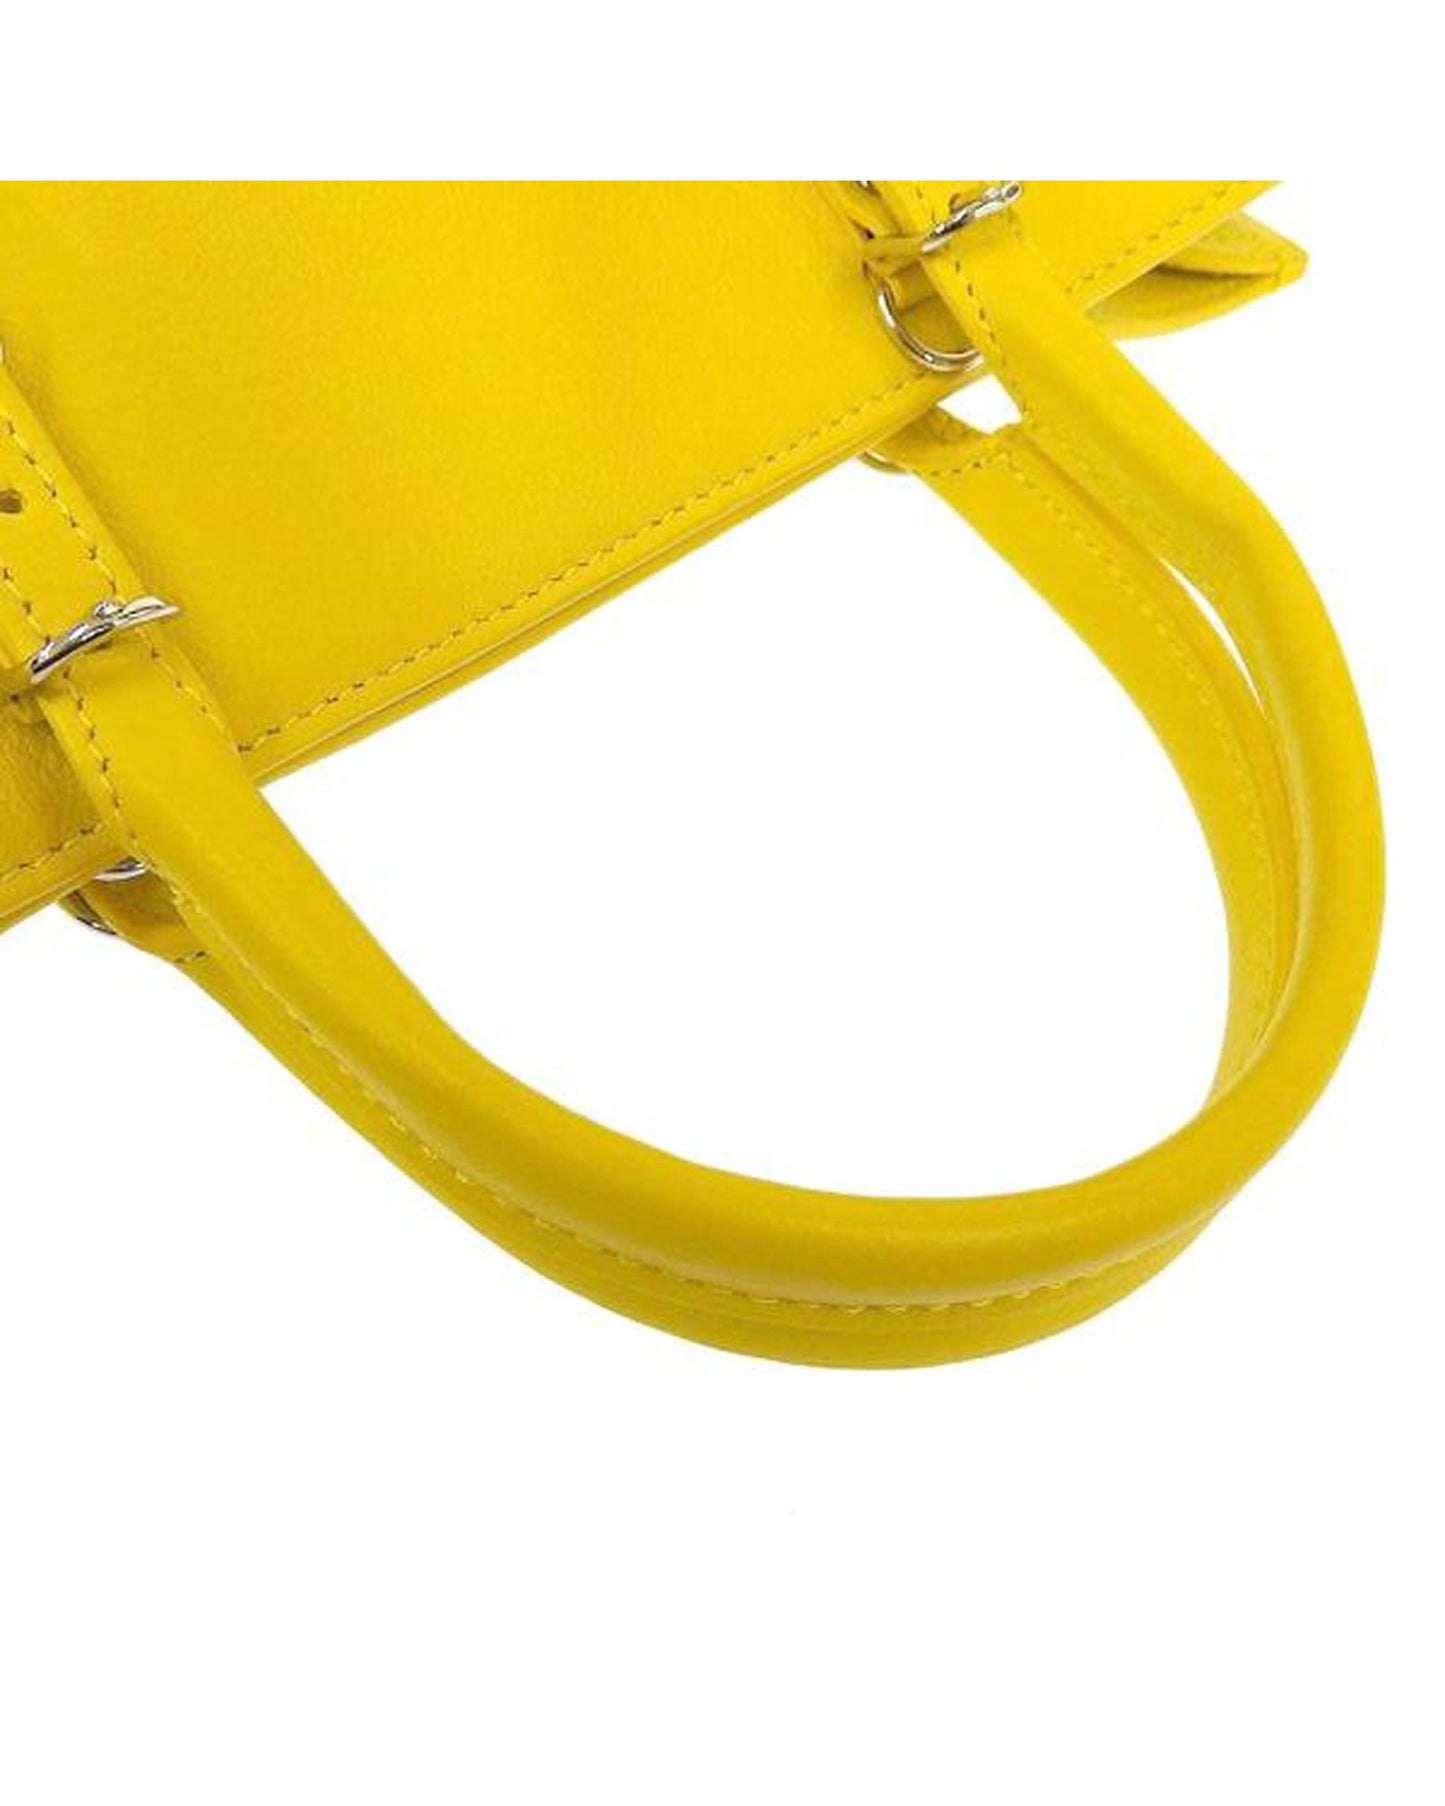 Balenciaga Women's Yellow Zip Around Tote Bag in A Condition in Yellow